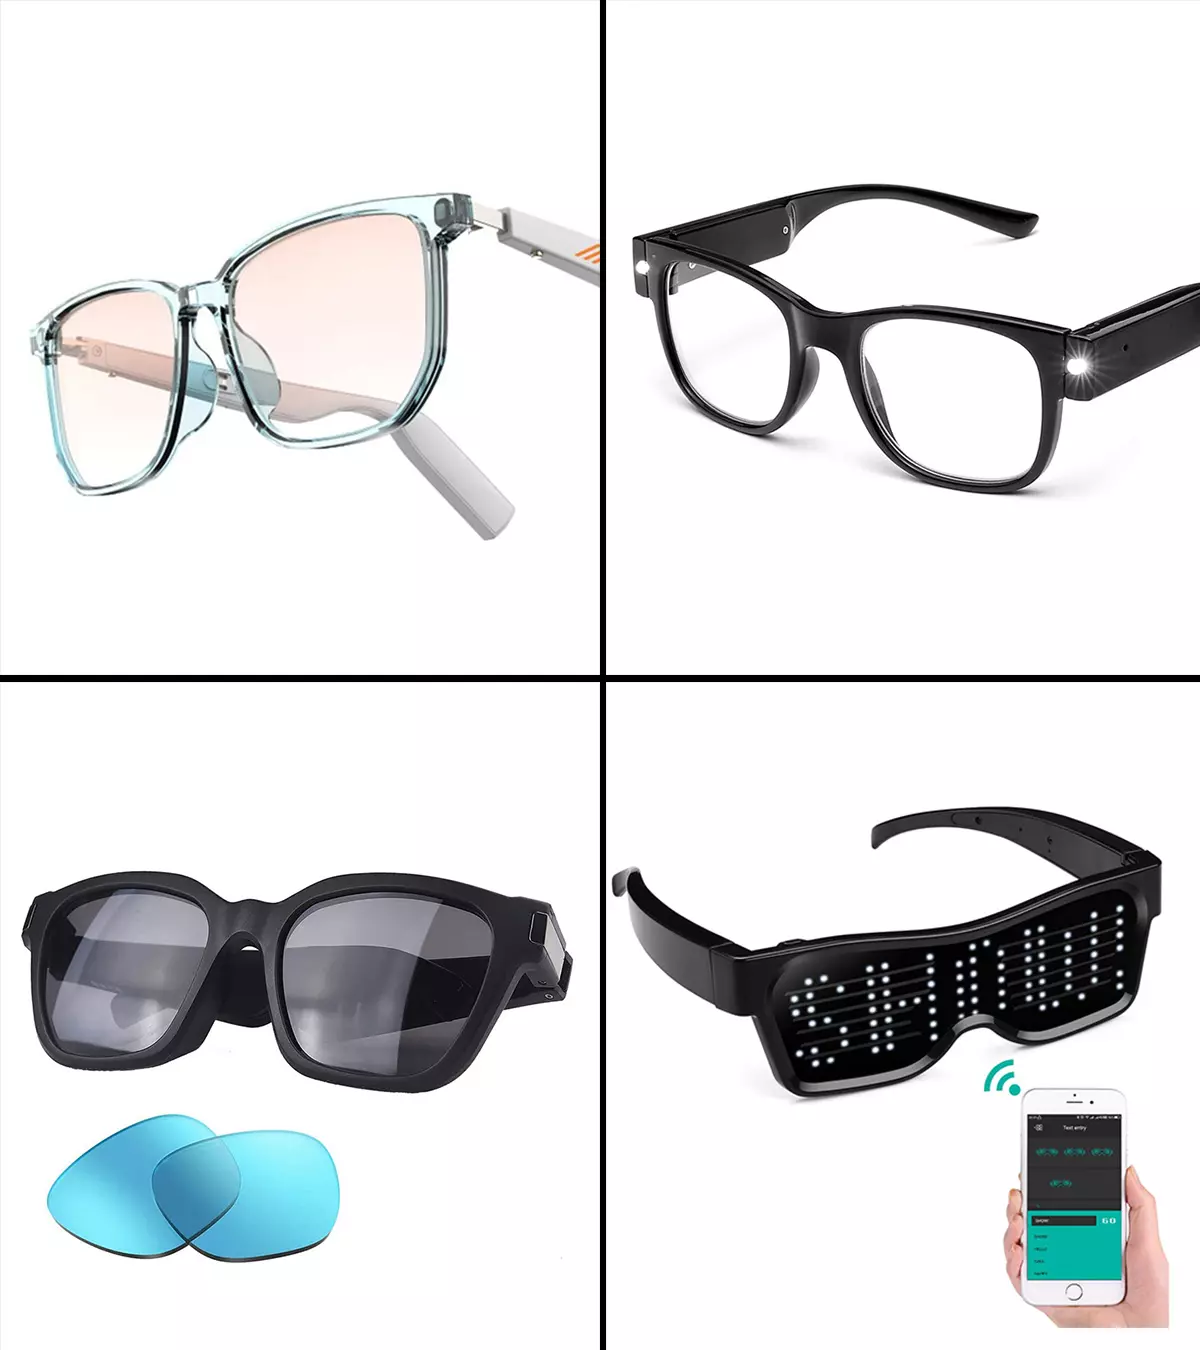 Best Smart Glasses To Buy